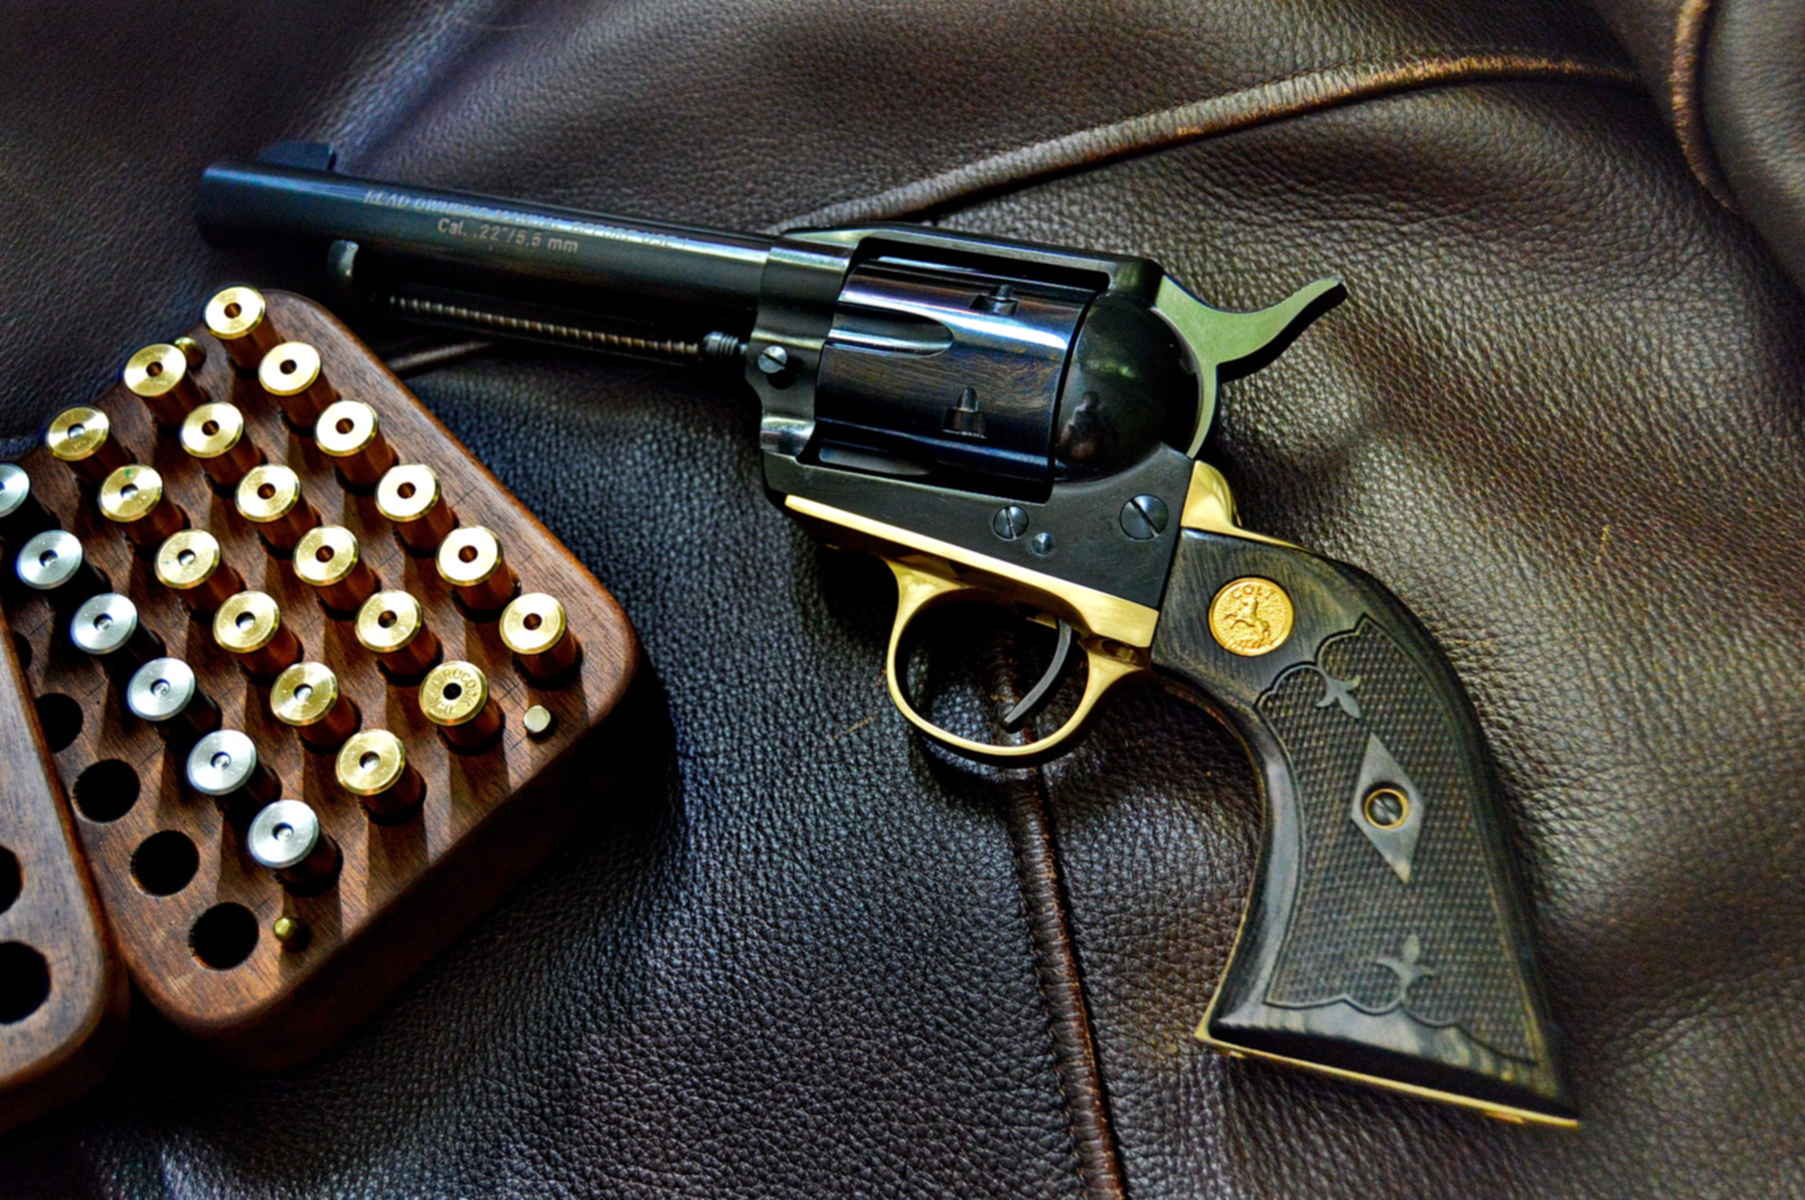 N. ME Colt Single Action Army - LEP револьвер по прозвищу "Миротворец&...